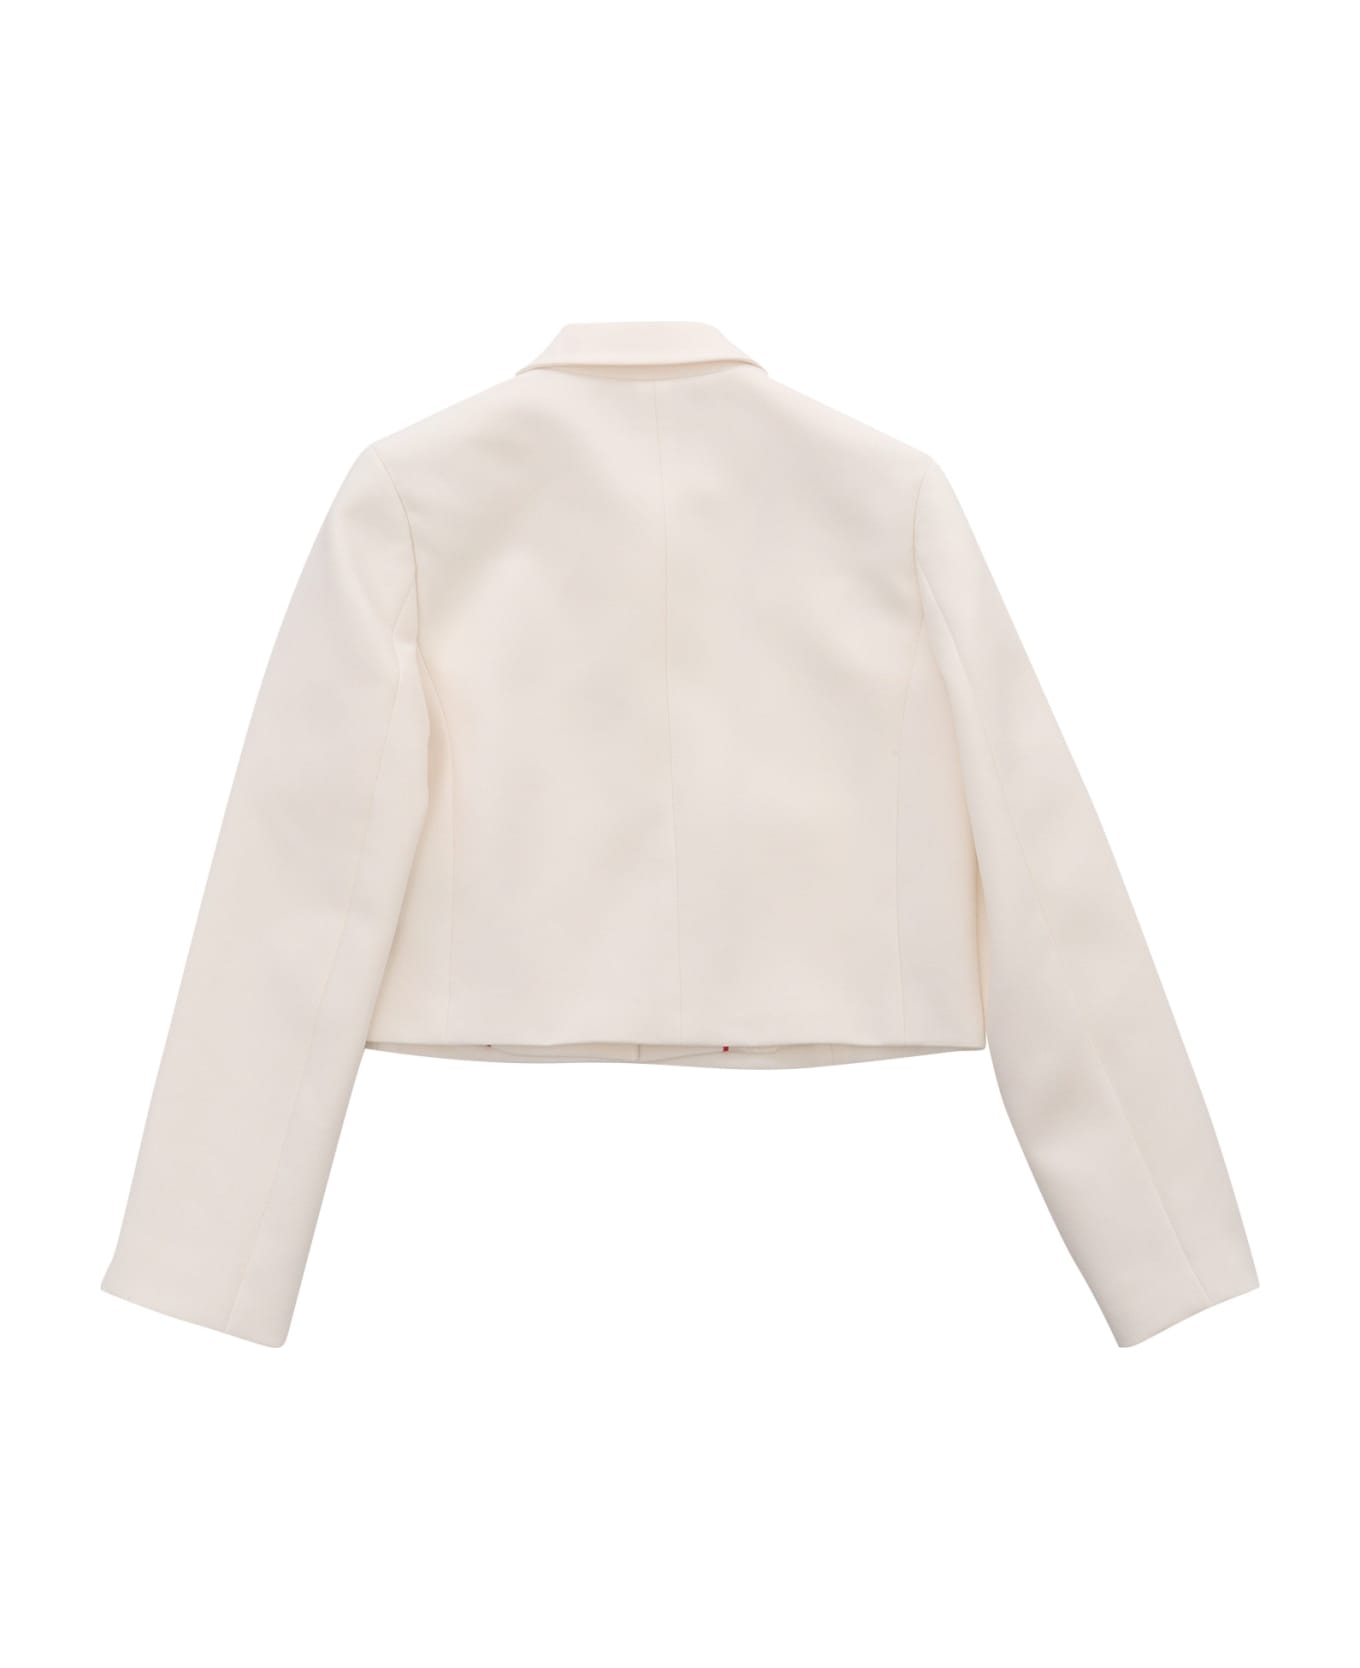 Max&Co. White Cropped Jacket - WHITE